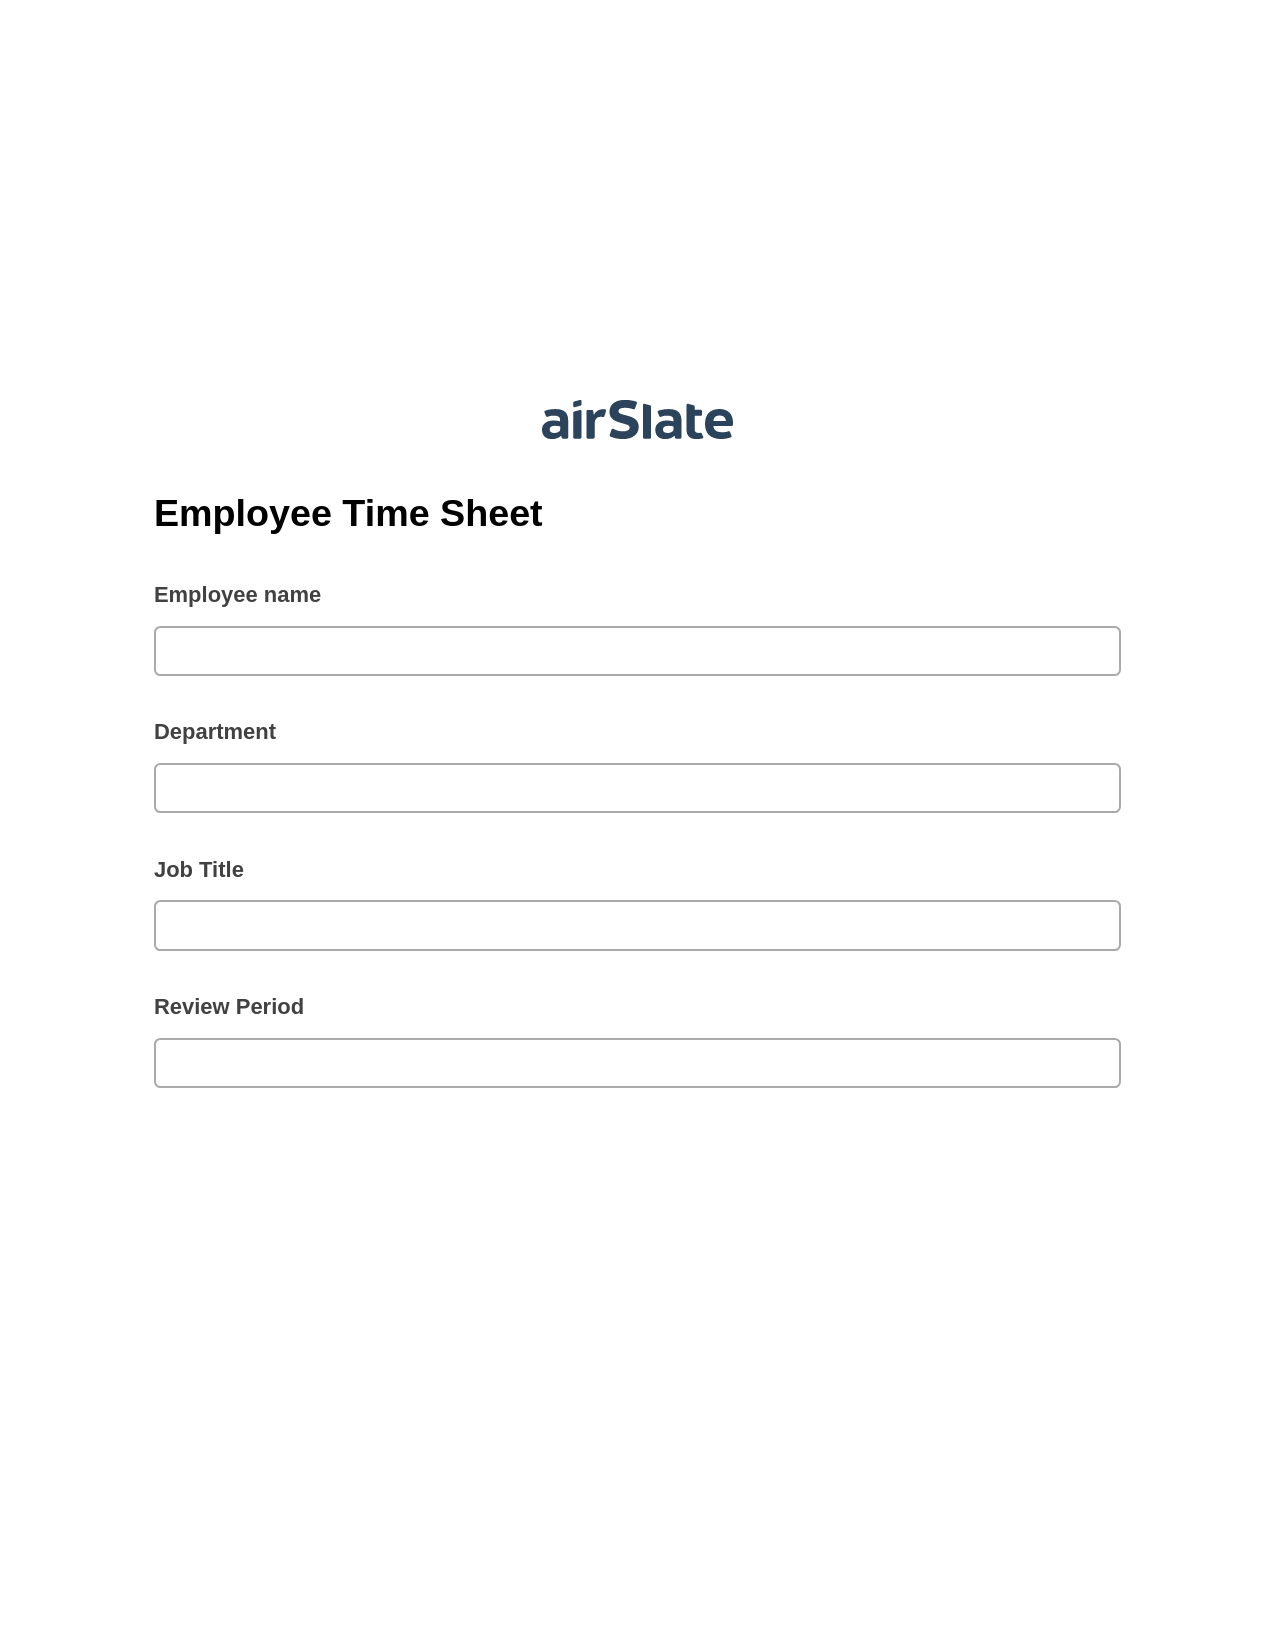 Multirole Employee Time Sheet Pre-fill from MySQL Bot, Create Salesforce Records Bot, Archive to SharePoint Folder Bot